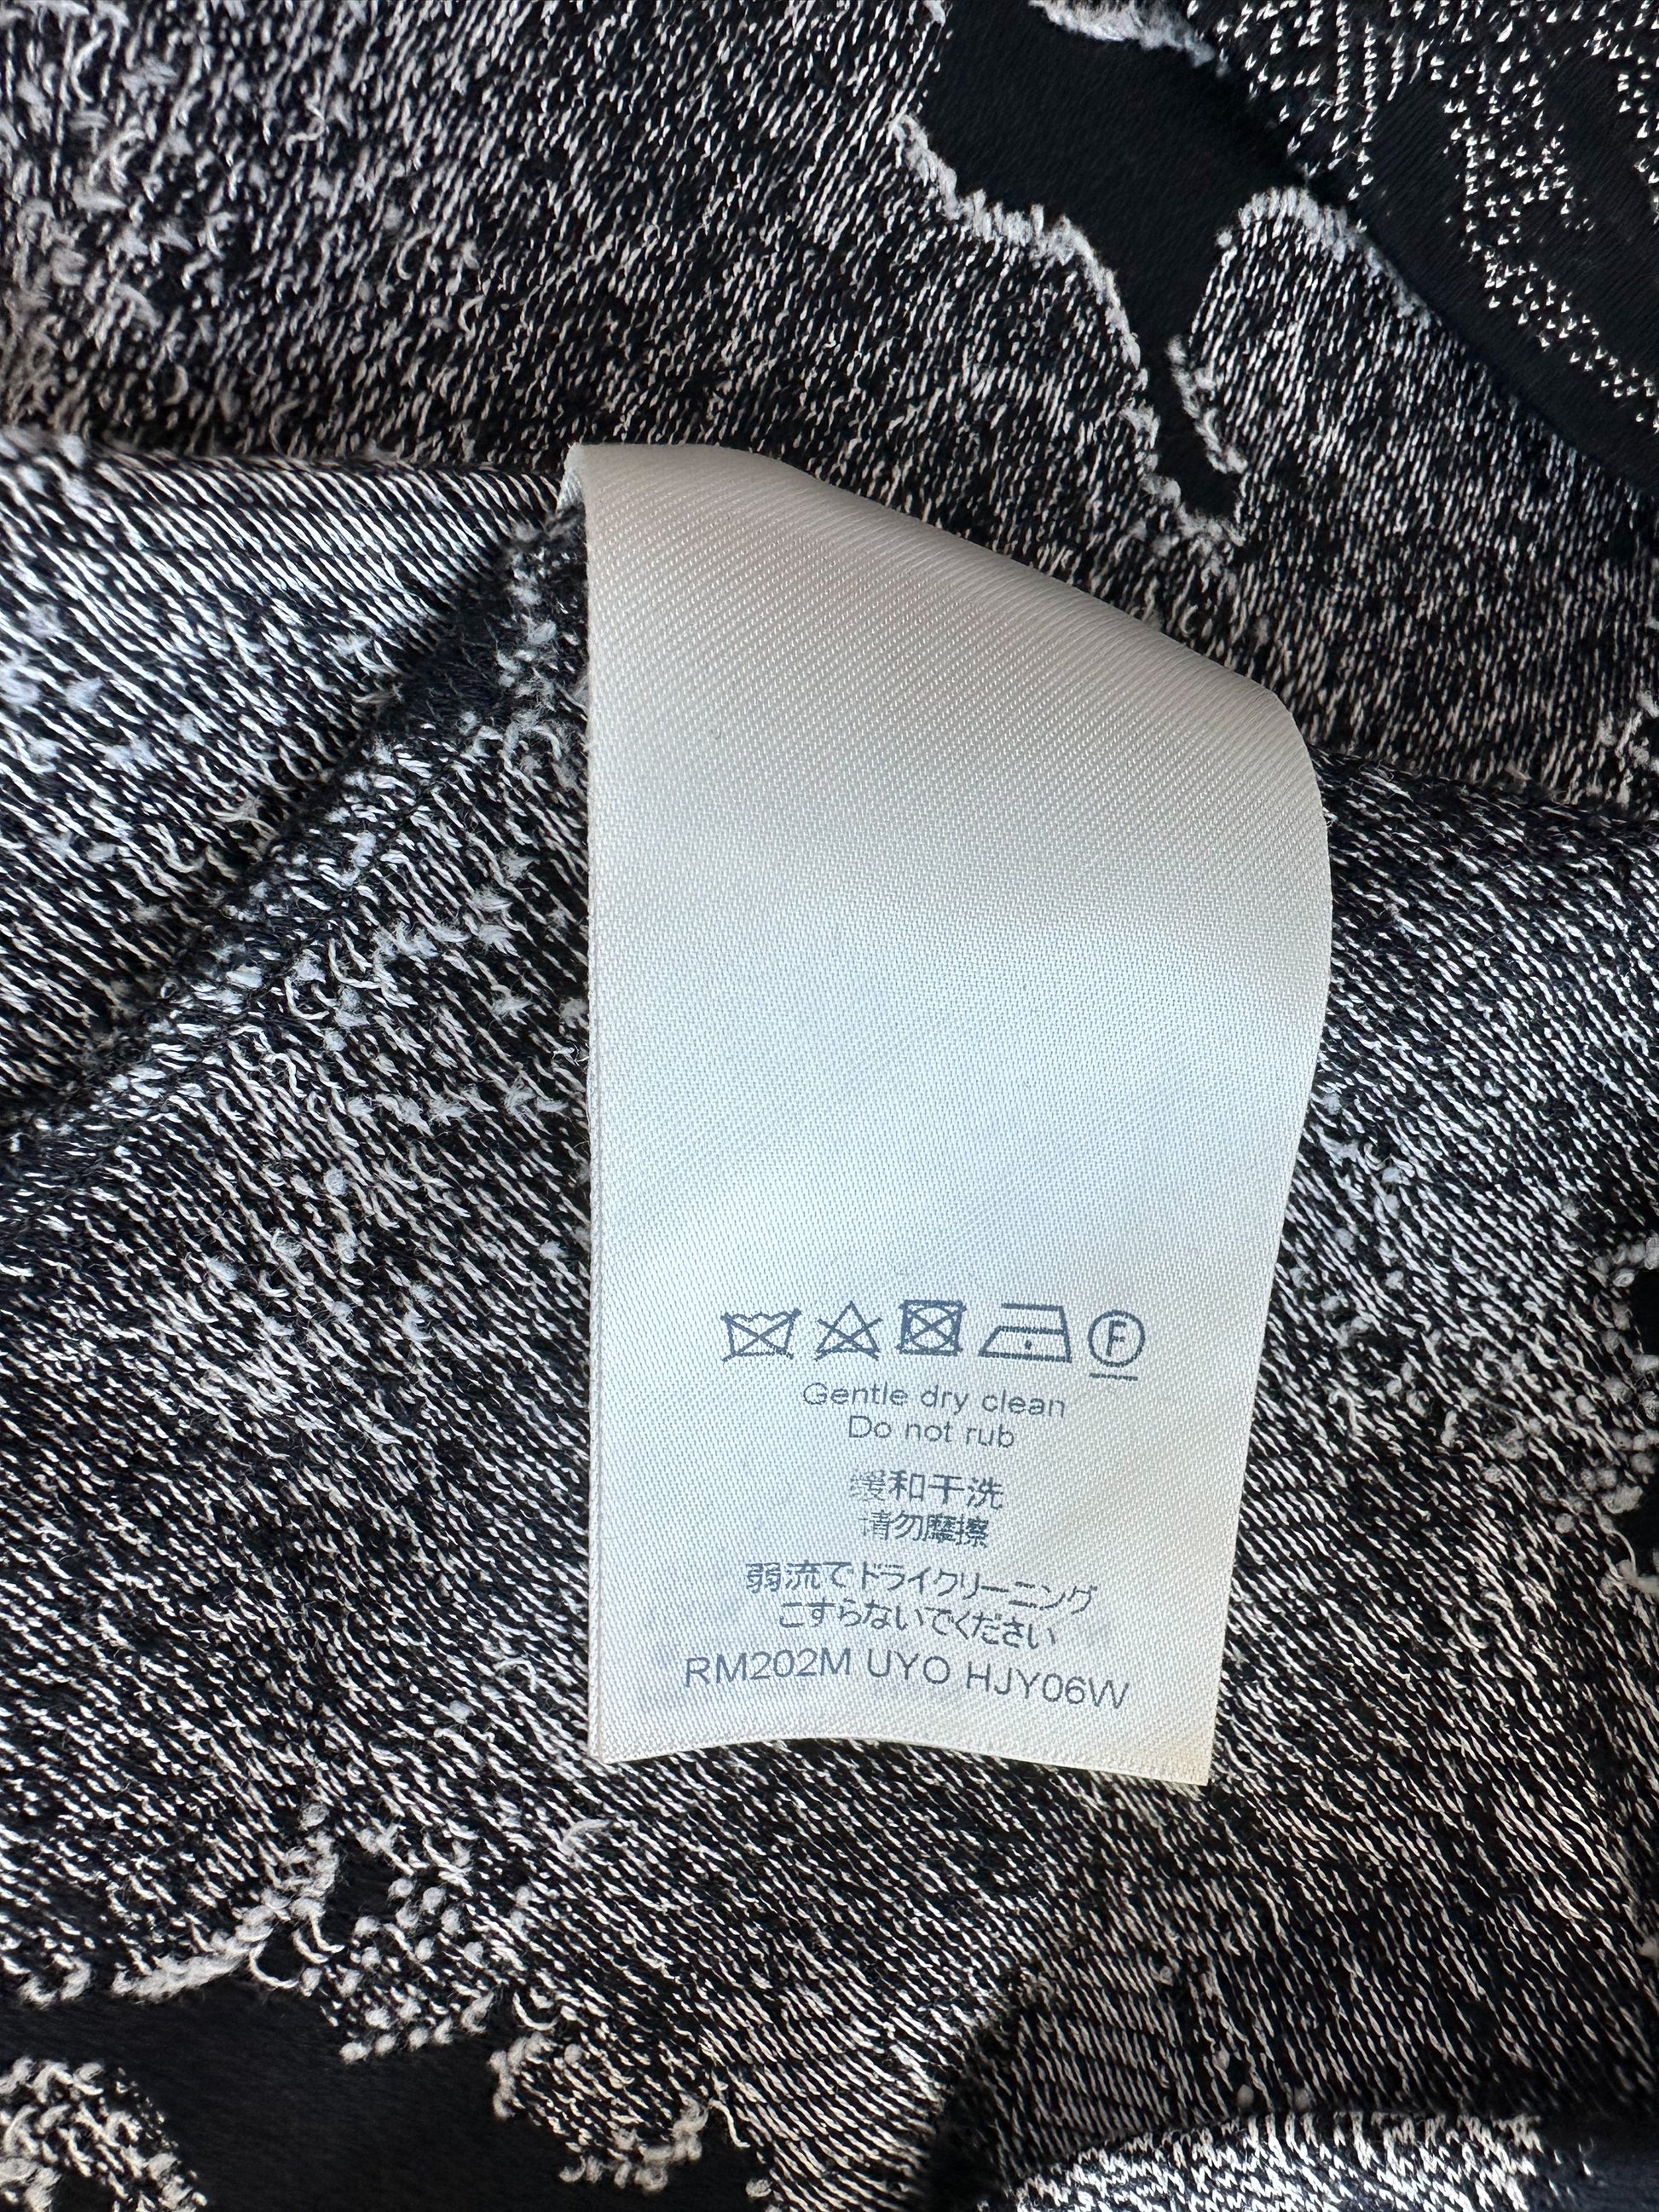 Louis Vuitton hook and loop monogram short sleeve t shirt mens size L grey  metal